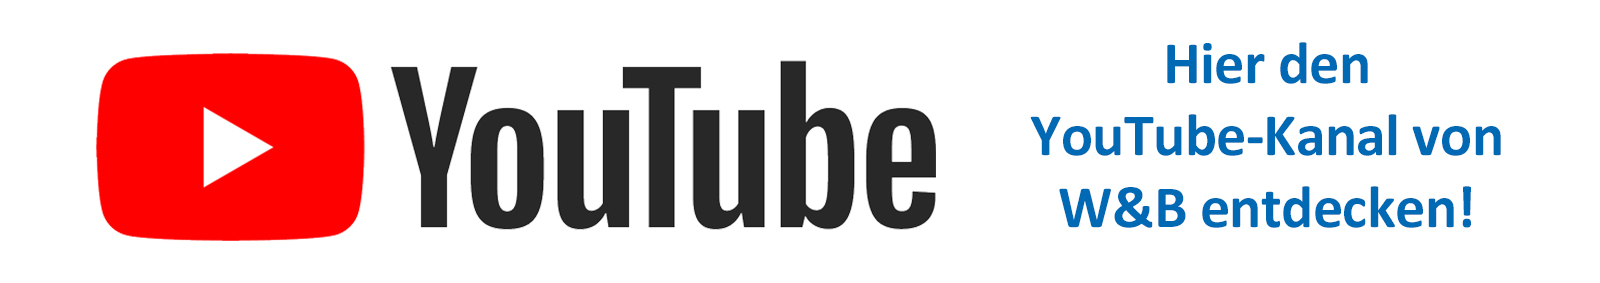 YouTube Logo und Kanalwerbung